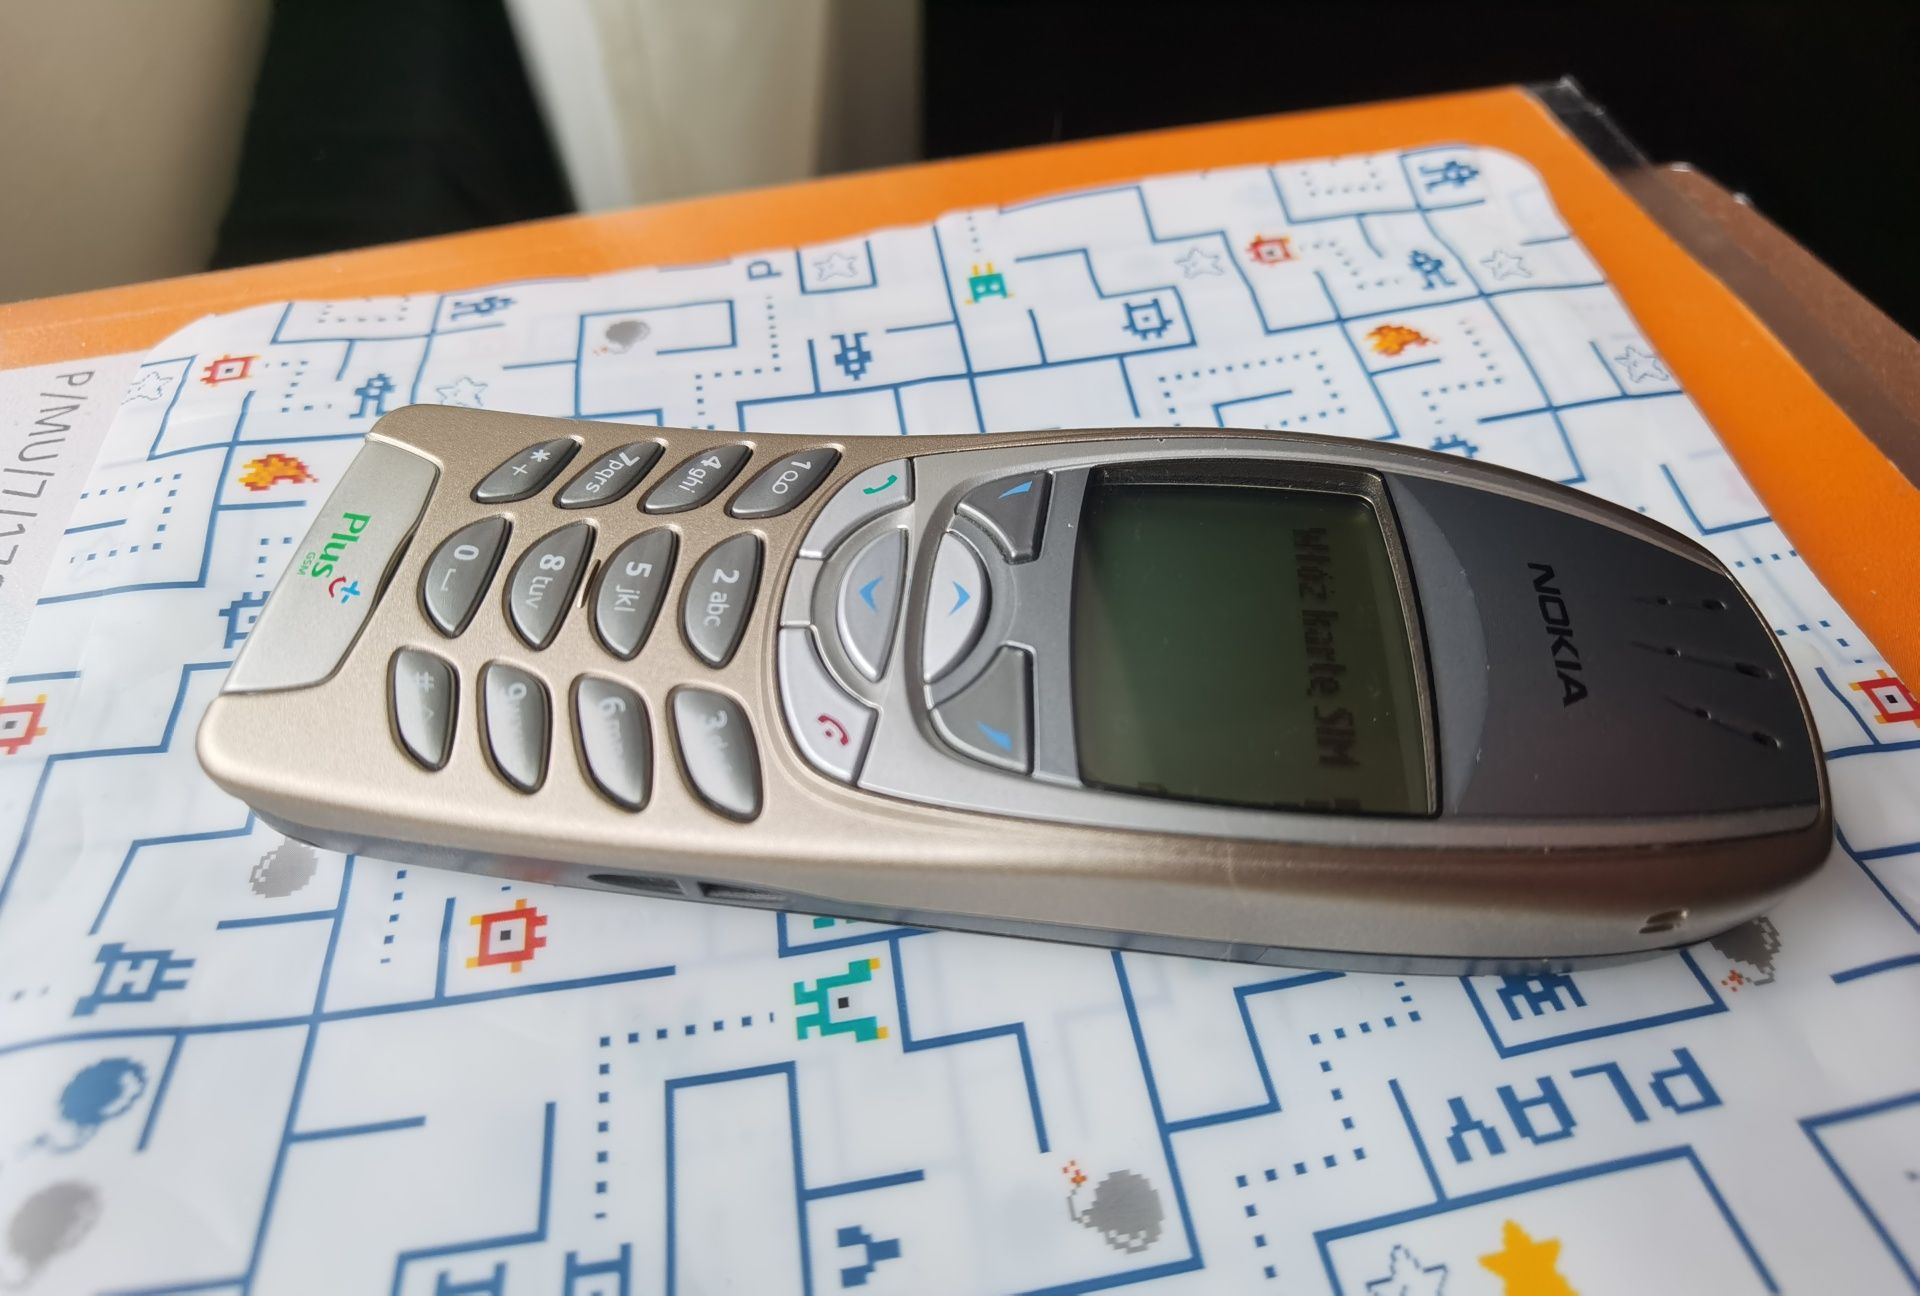 Nokia Retro 6310i Stan wzorowy